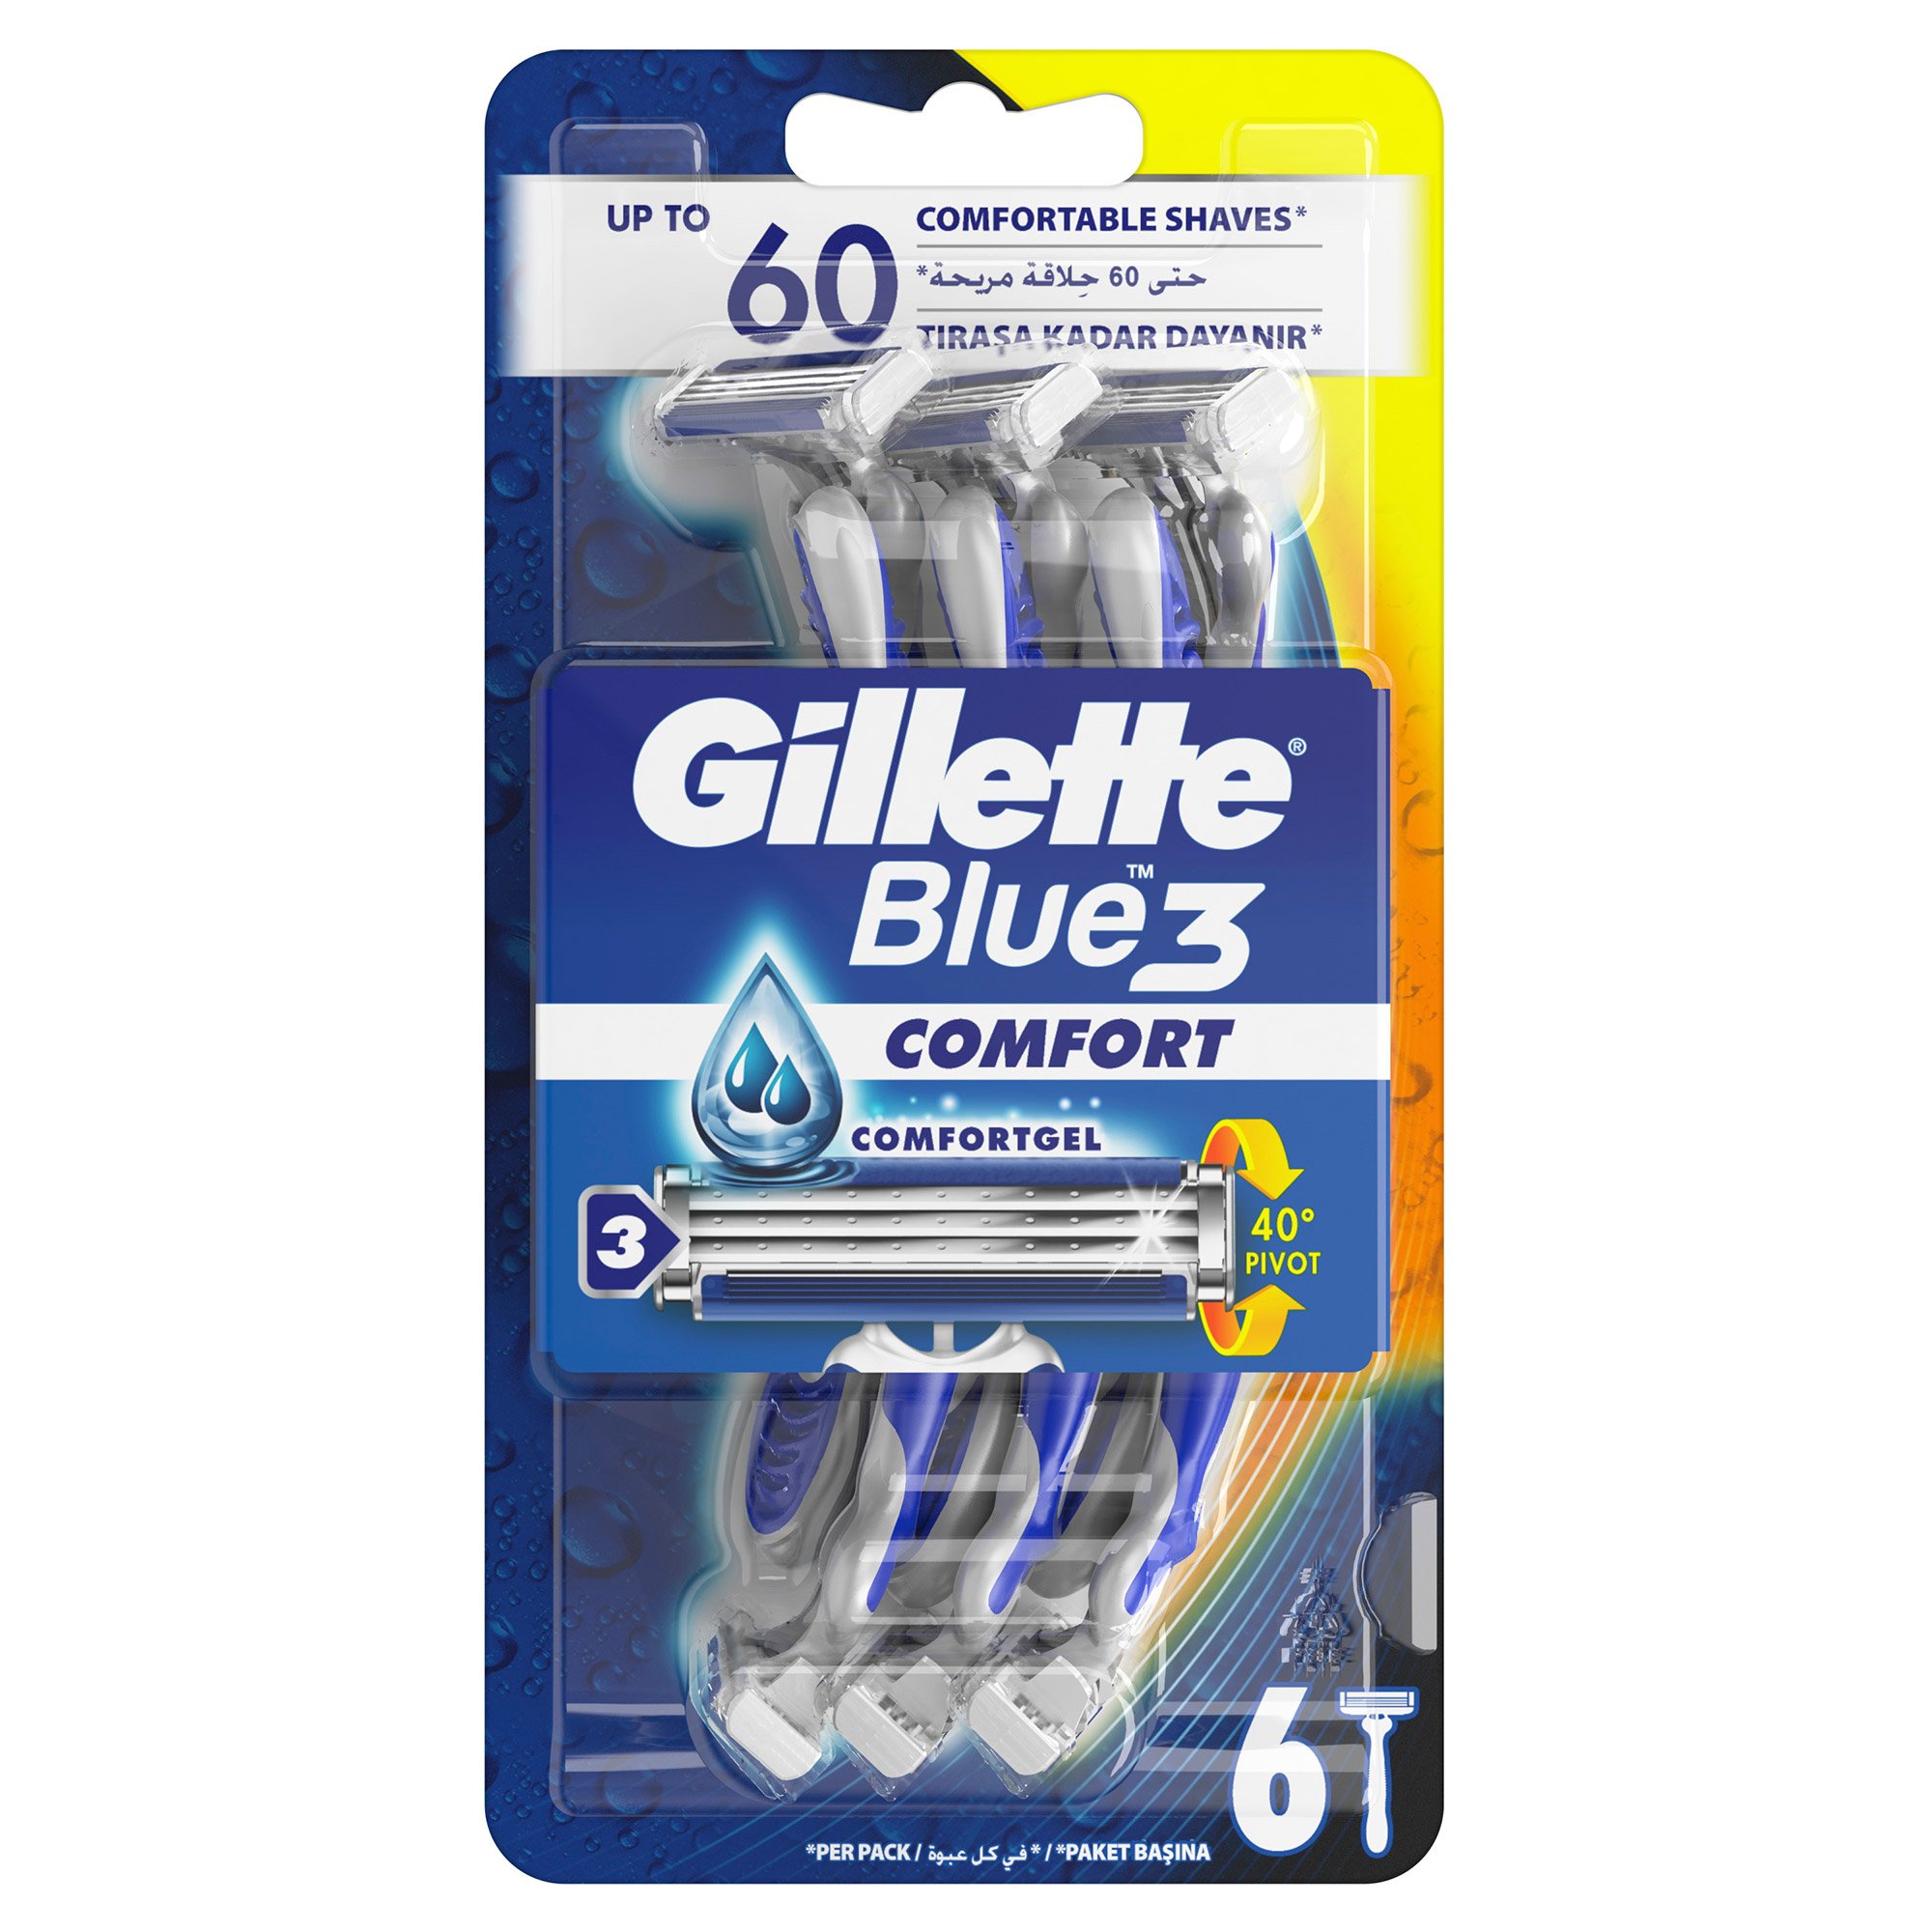 Gillette Blue3 Comfort Kullan At Tıraş Bıçağı 6'Lı